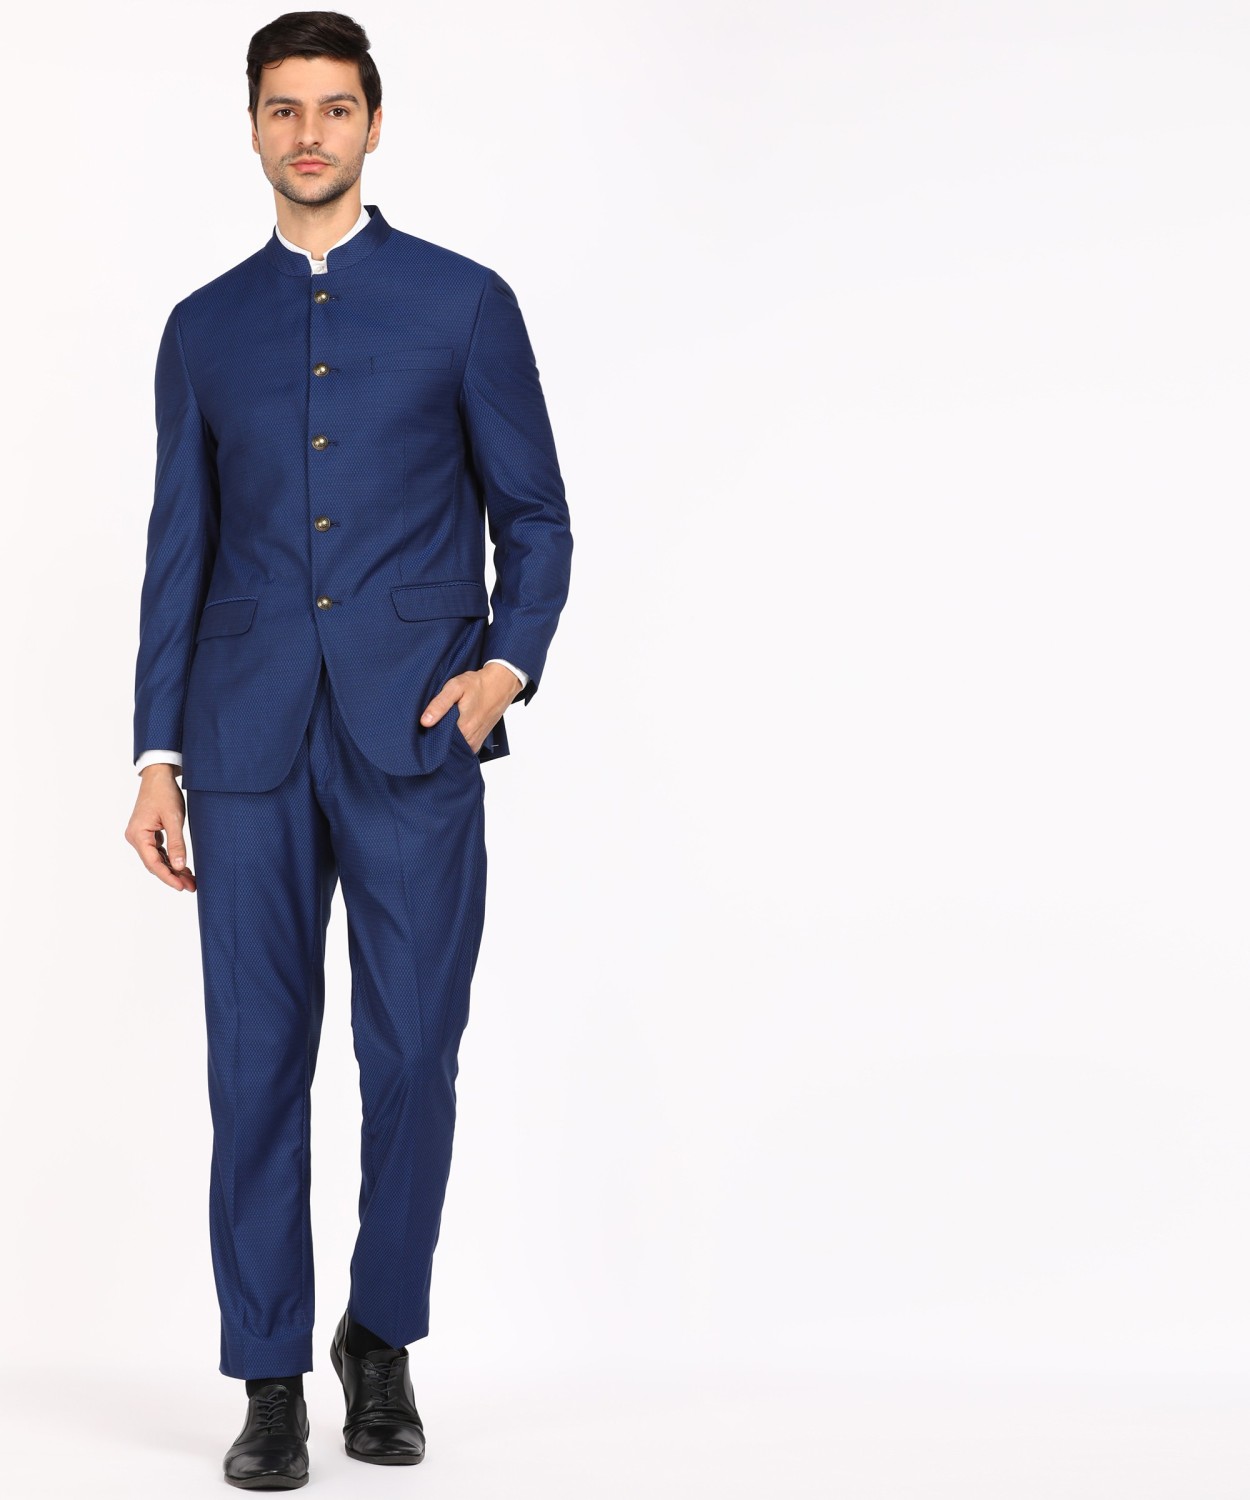 LOUIS PHILIPPE Bandhgala suit Textured Men Suit - Price History